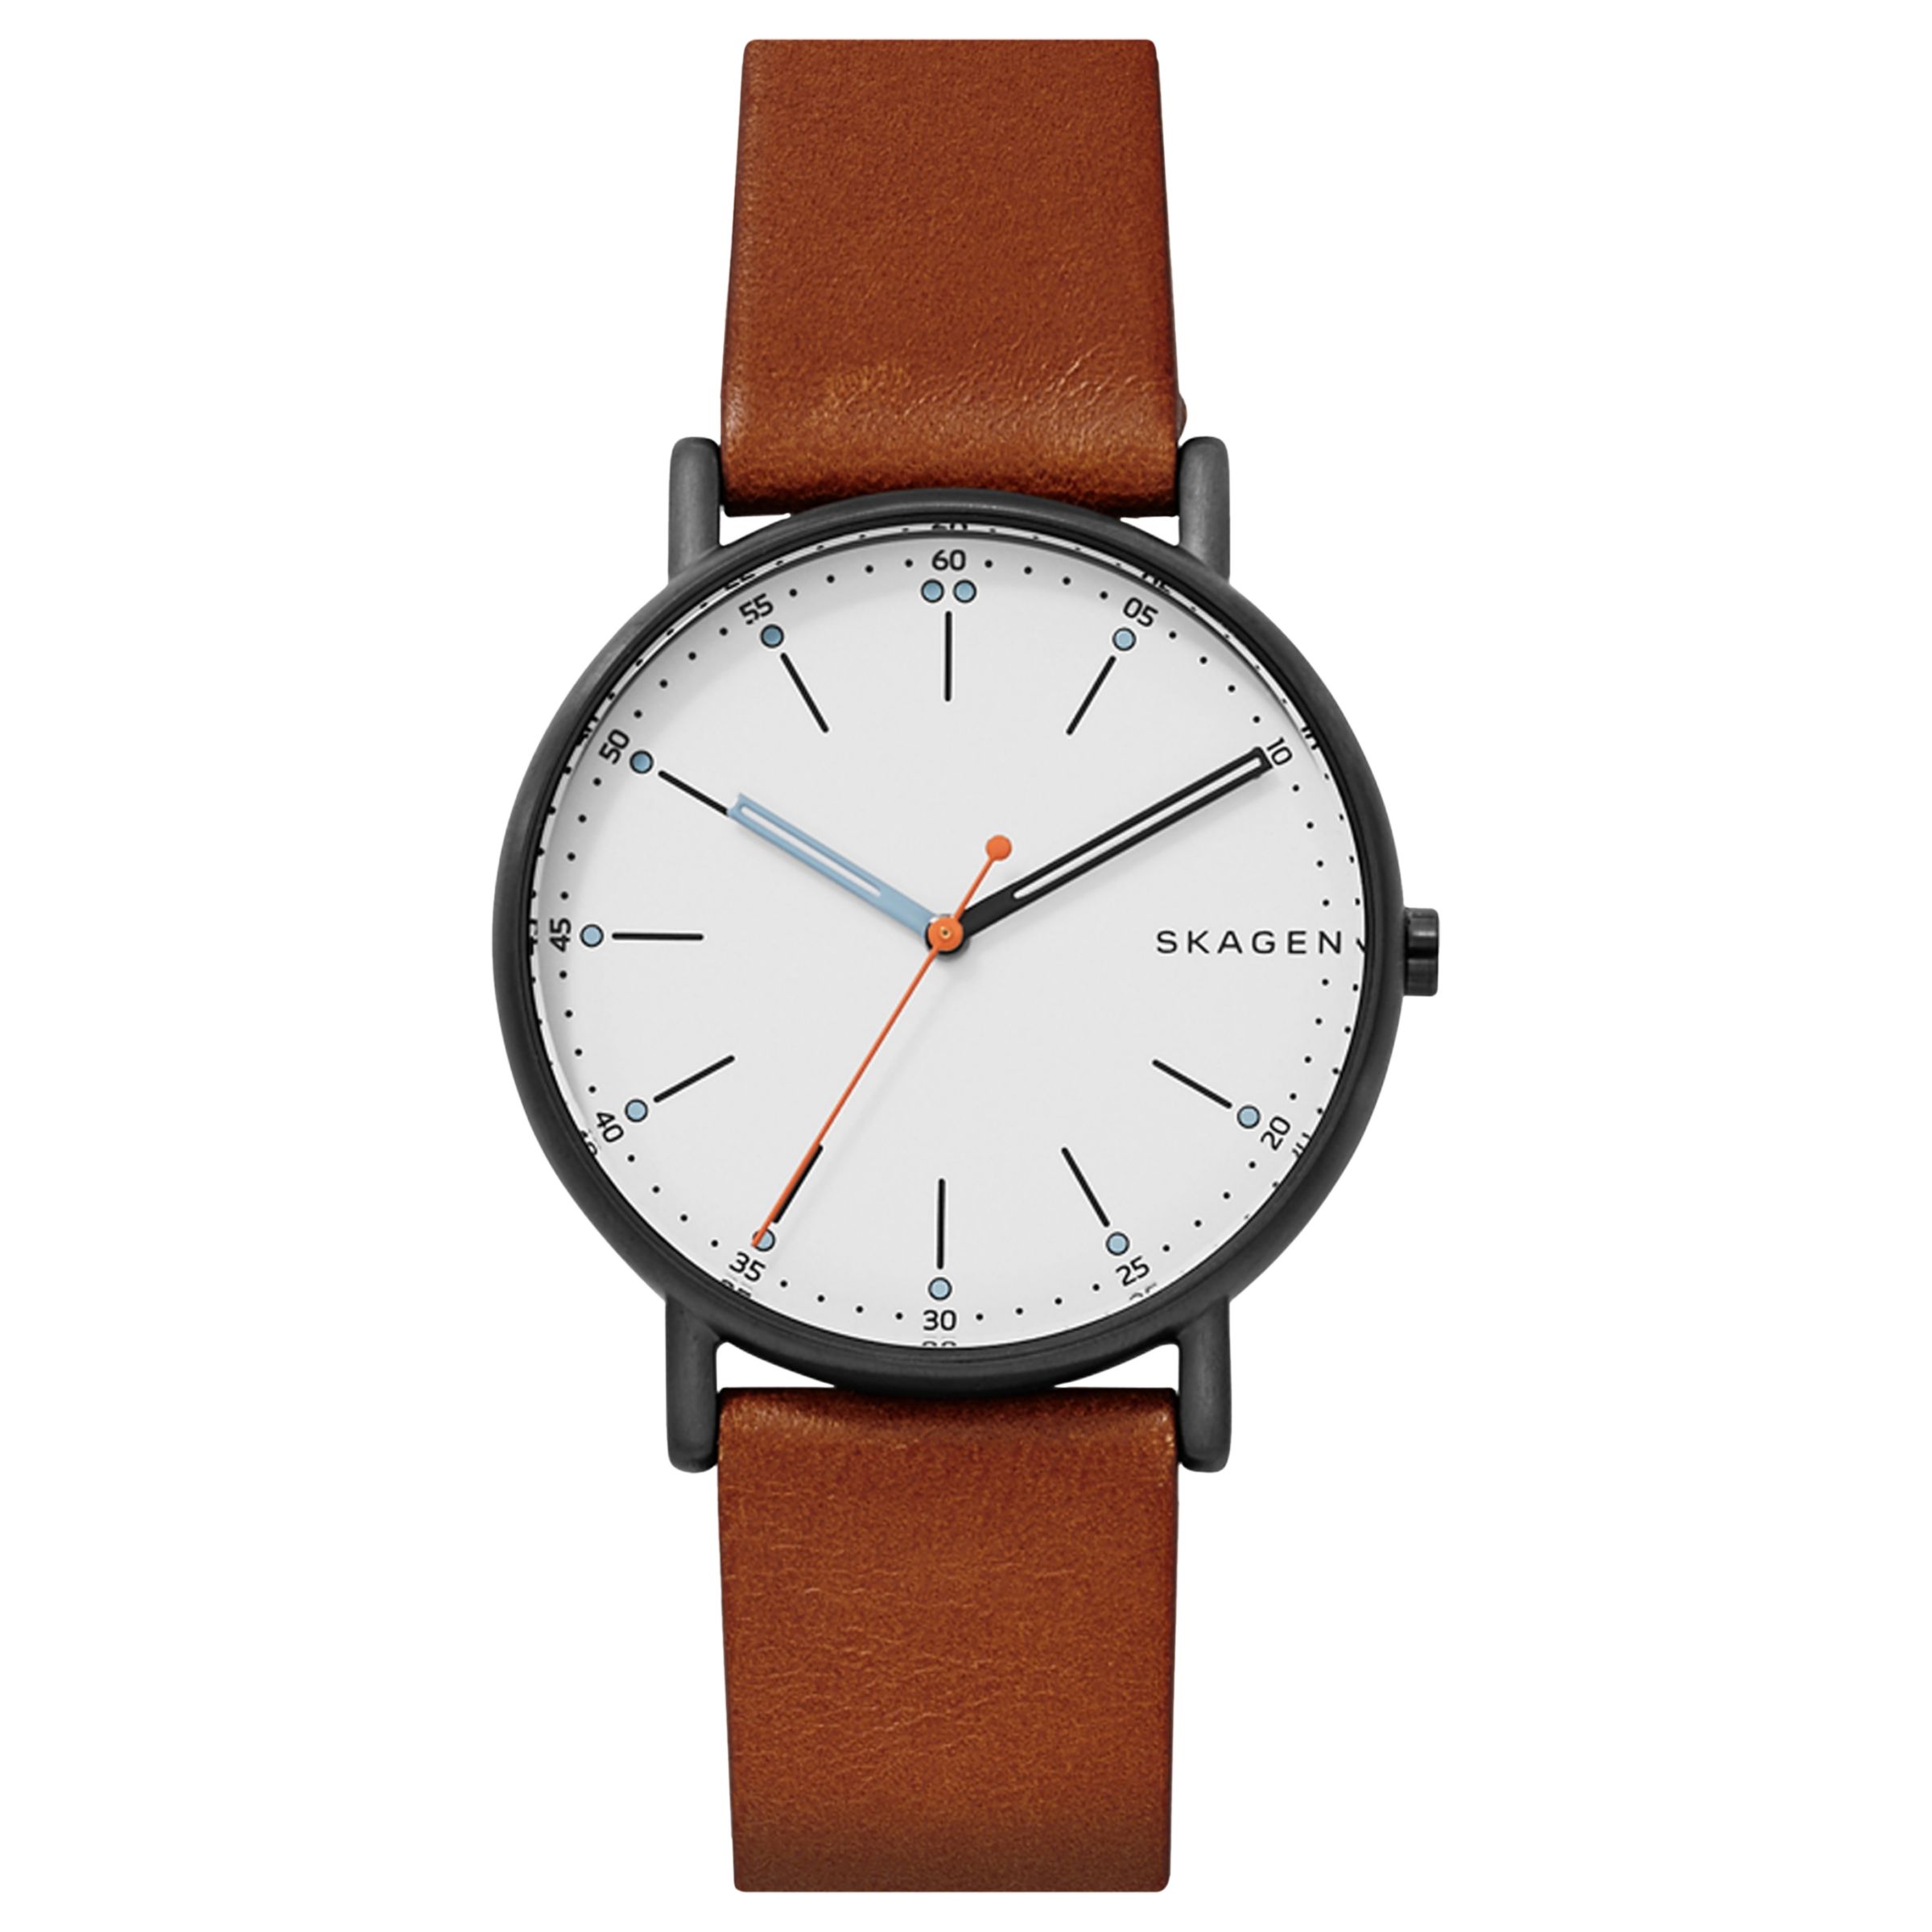 Buy Skagen Men's Signatur Leather Strap Watch Online at johnlewis.com